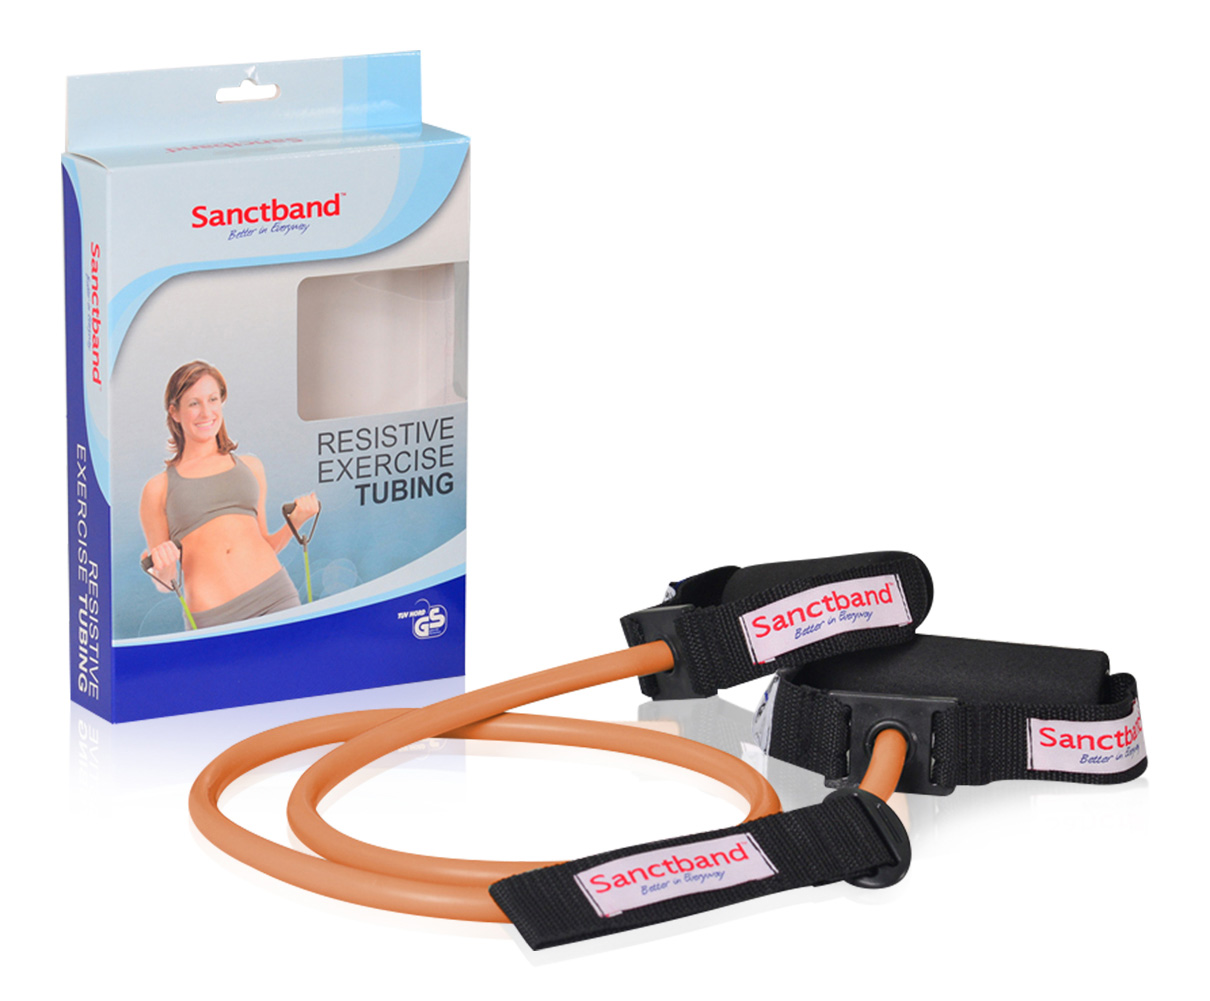 Sanctband Resistive Exercise Tubing Peach